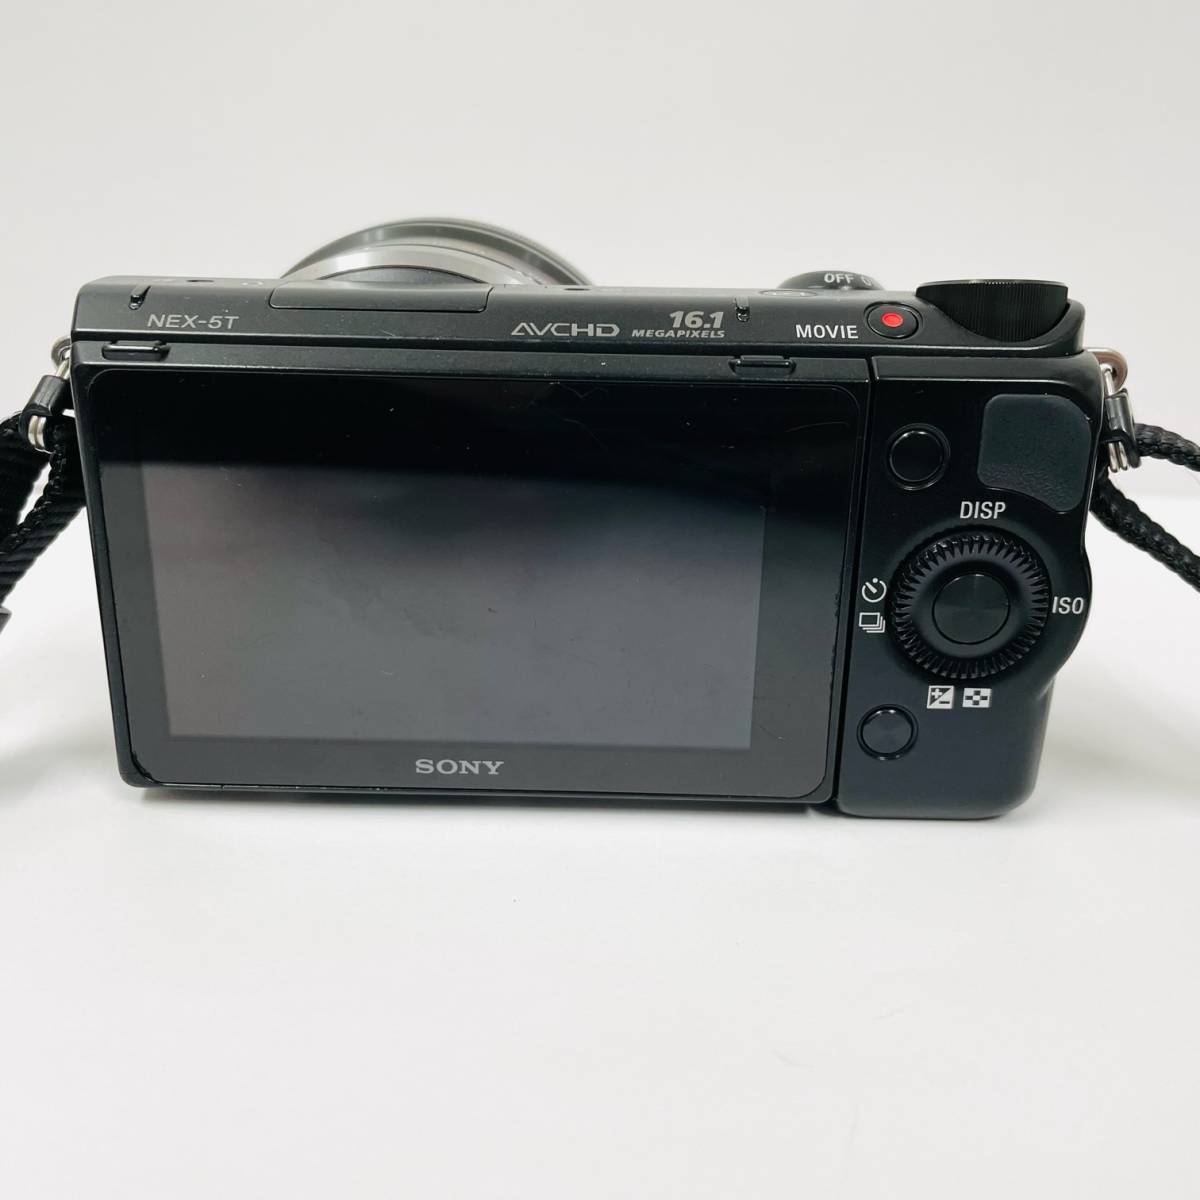 C-64487I 【美品】 SONY ミラーレス一眼 カメラ レンズ NEX-5T α E3.5-5.6/PZ 16-50 OSS AVCHD 16.1 APS-C / フラッシュ HVL-F7S セット_画像4